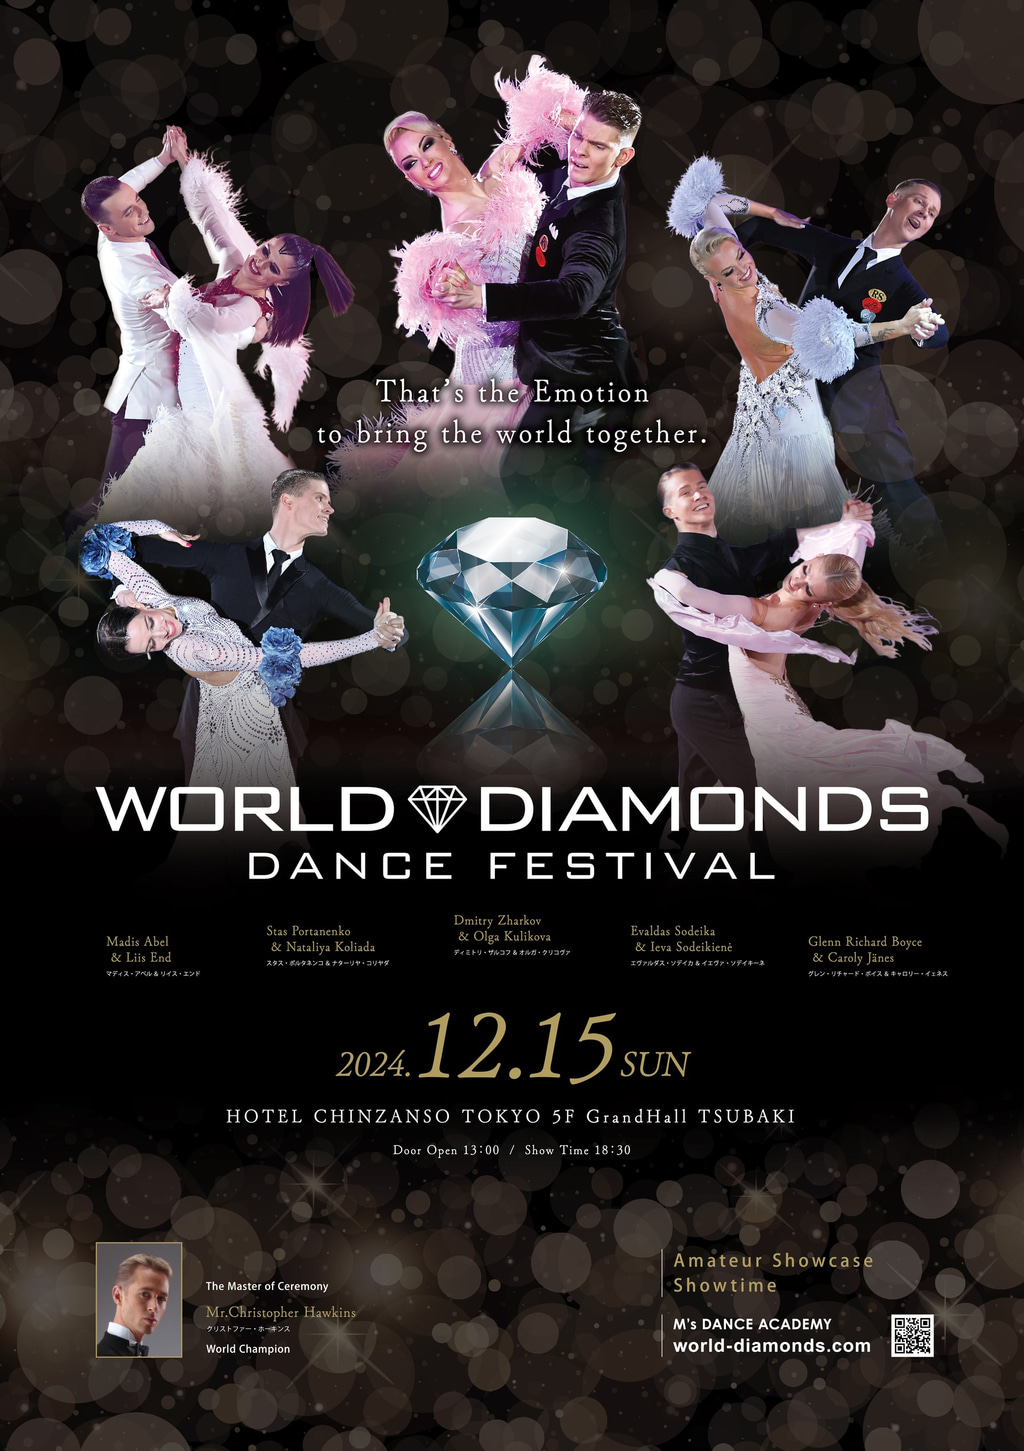 WORLD DIAMONDS DANCE FESTIVAL